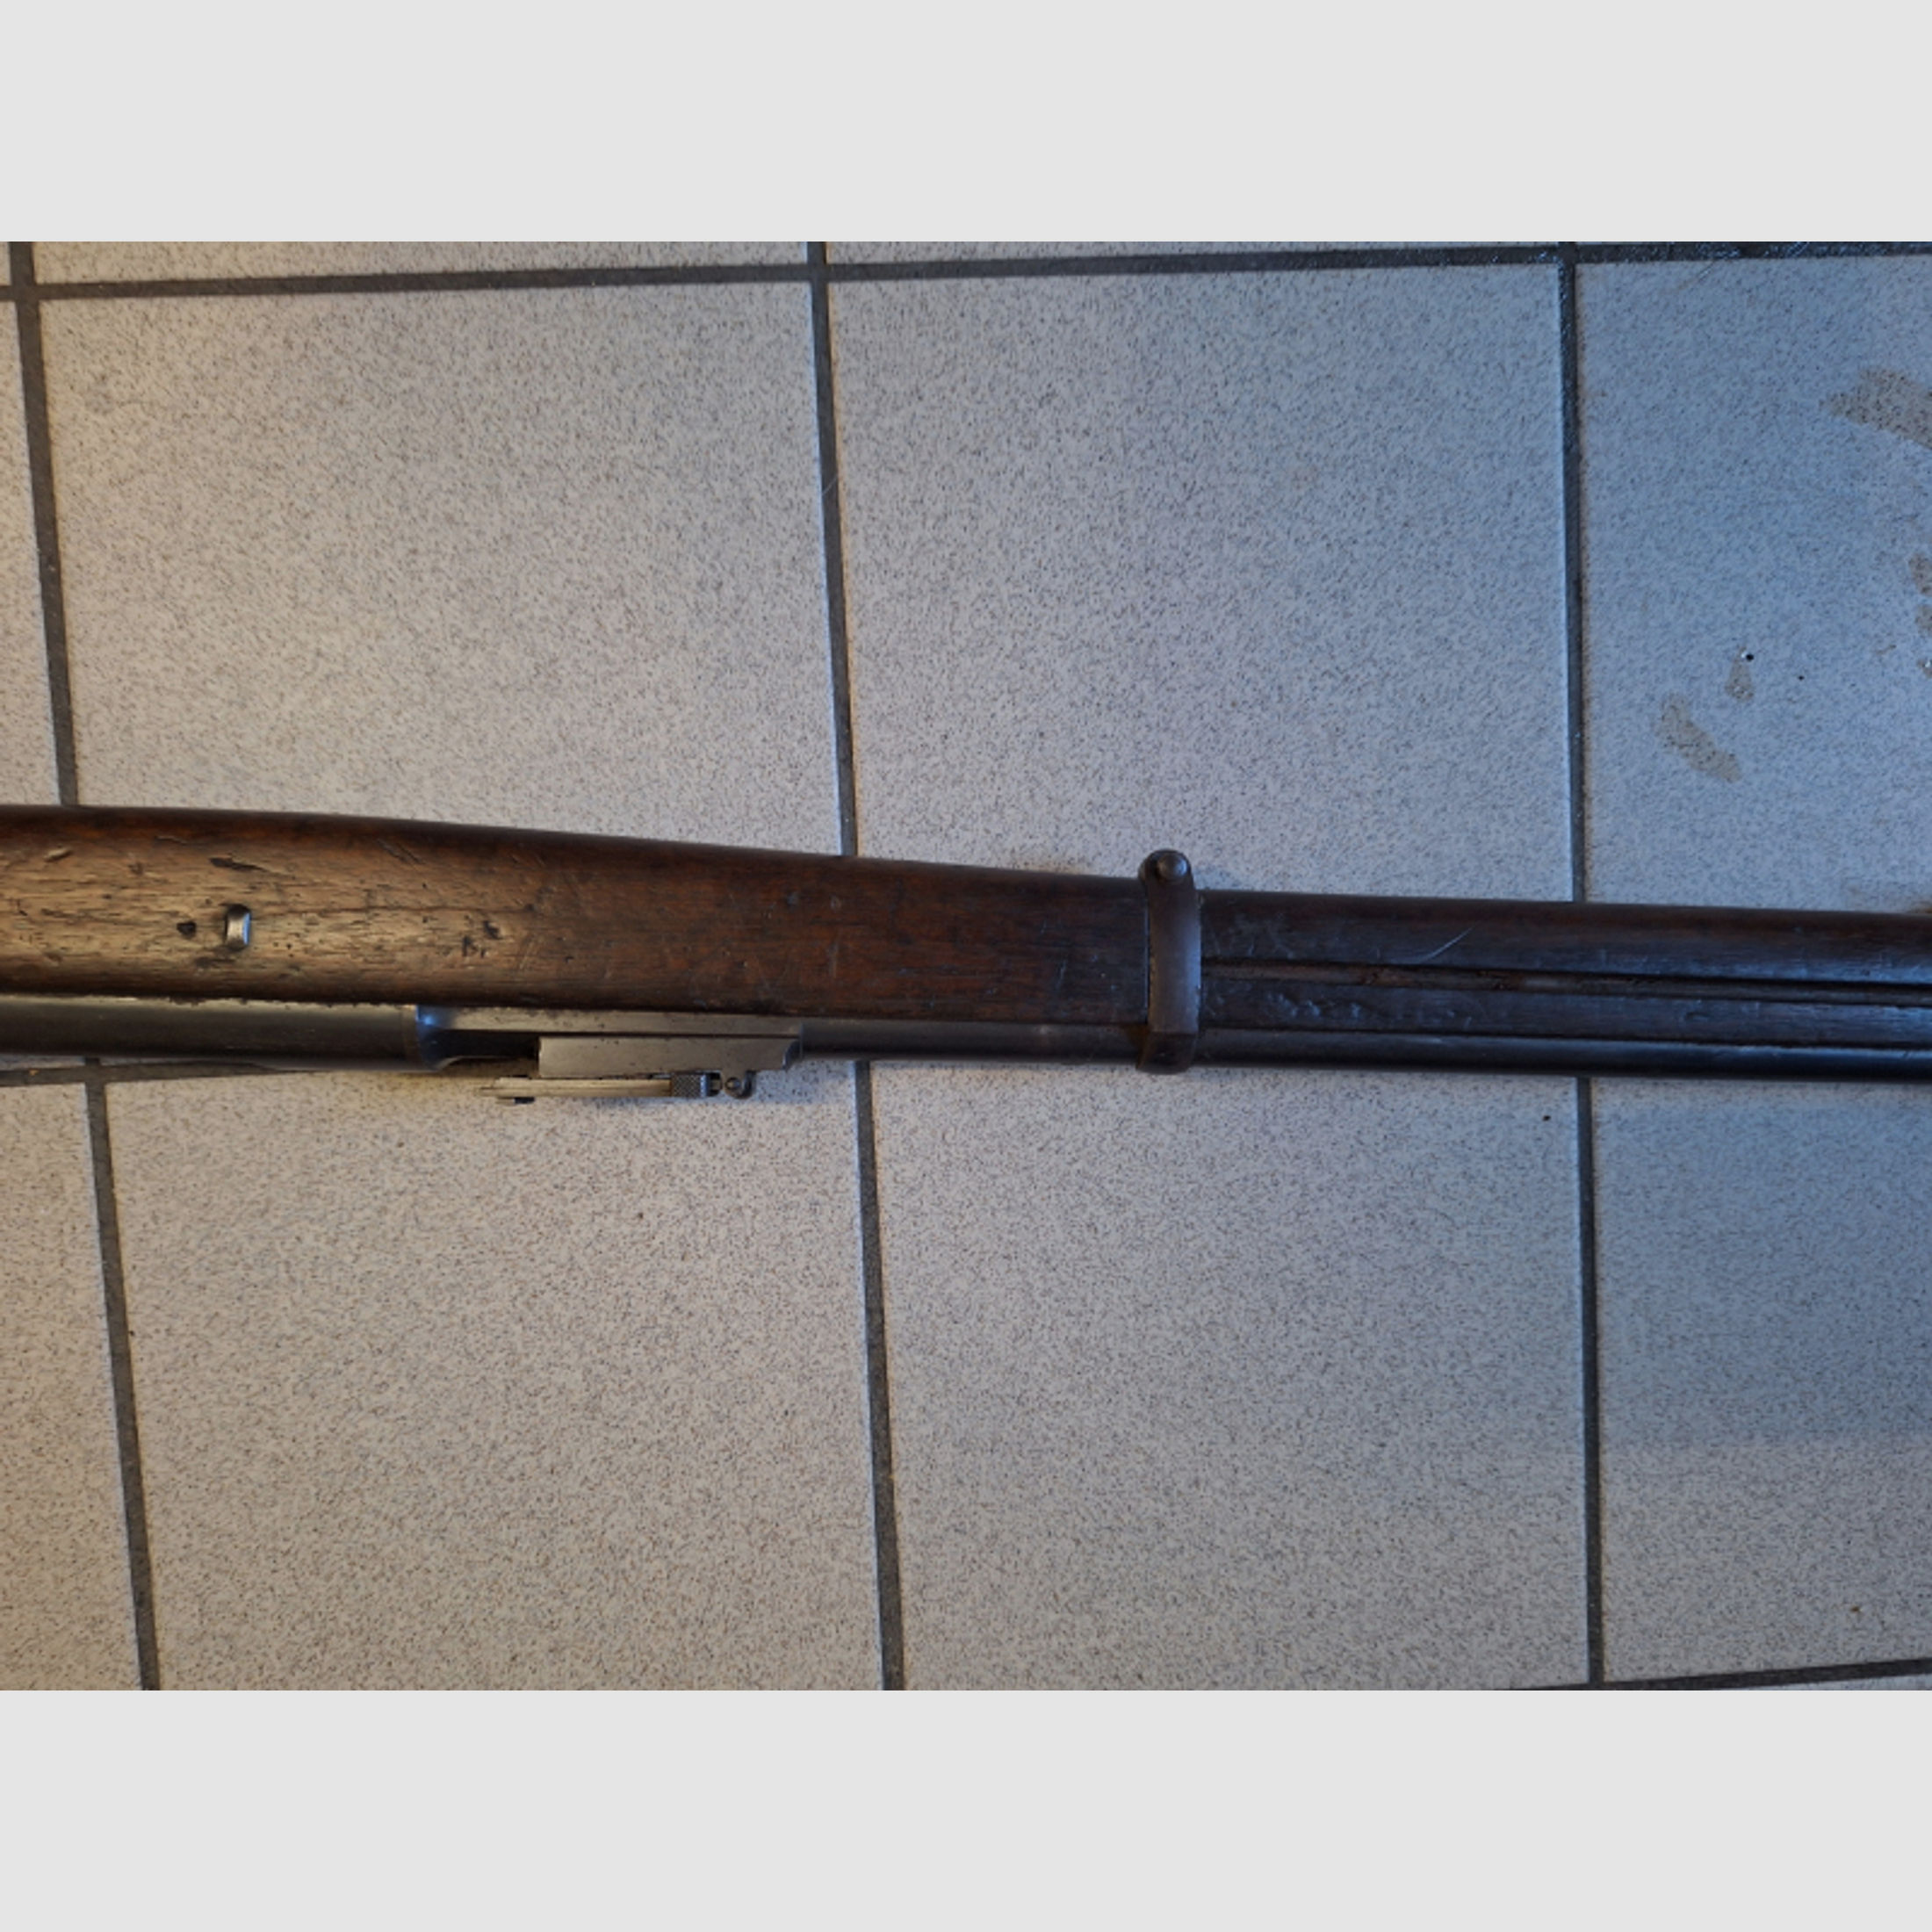 Kropatschek Sreyr M1886 Sammlerwaffe, Kal.8x60R Krop, guter Zusatand